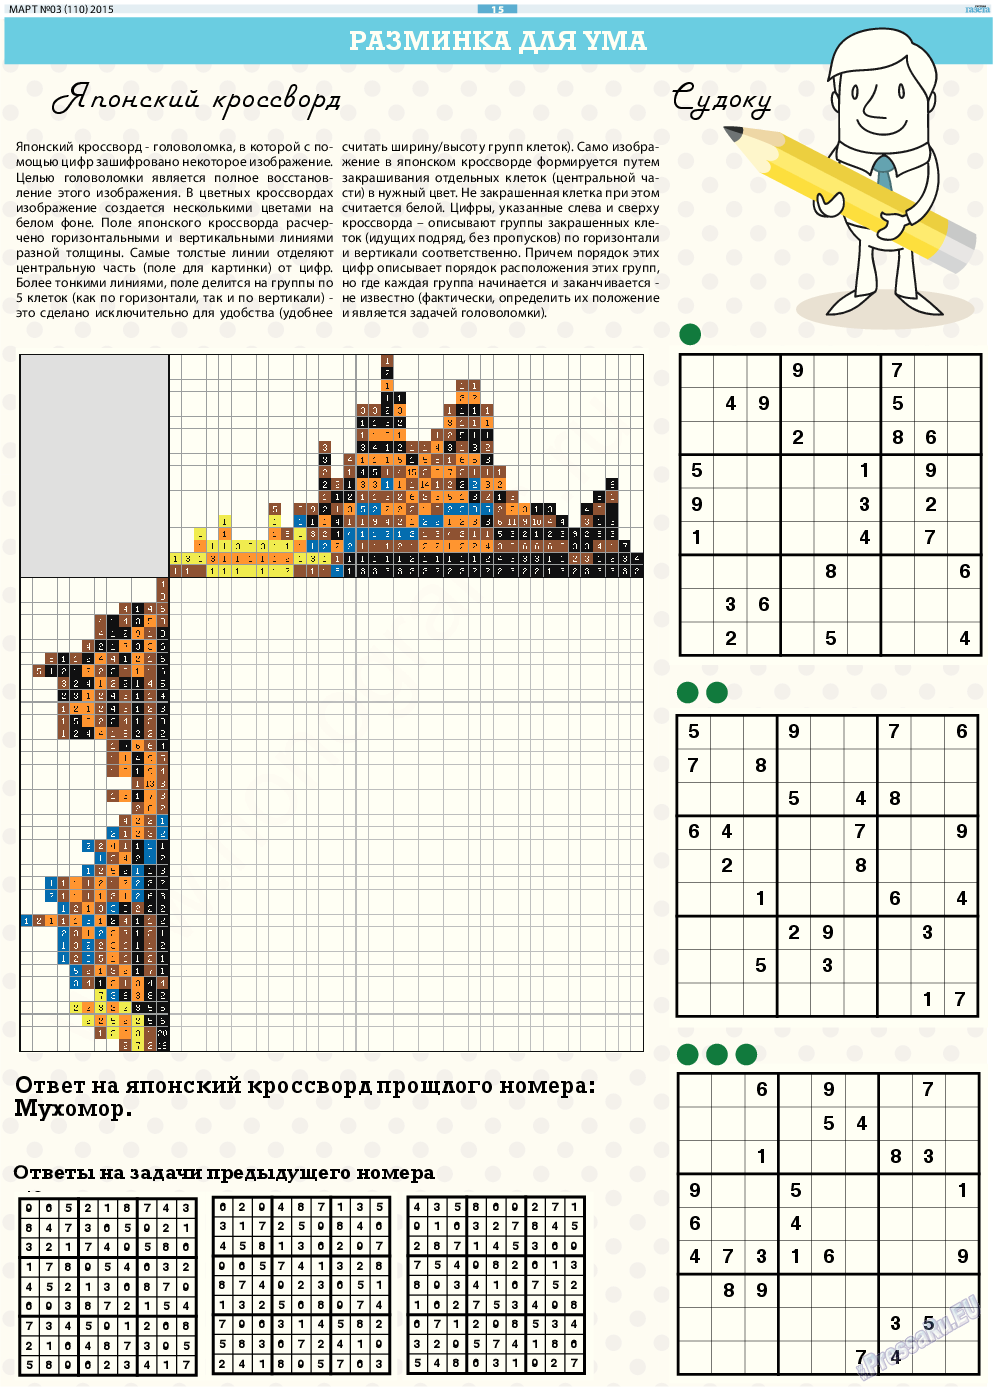 Русская Газета, газета. 2015 №3 стр.15